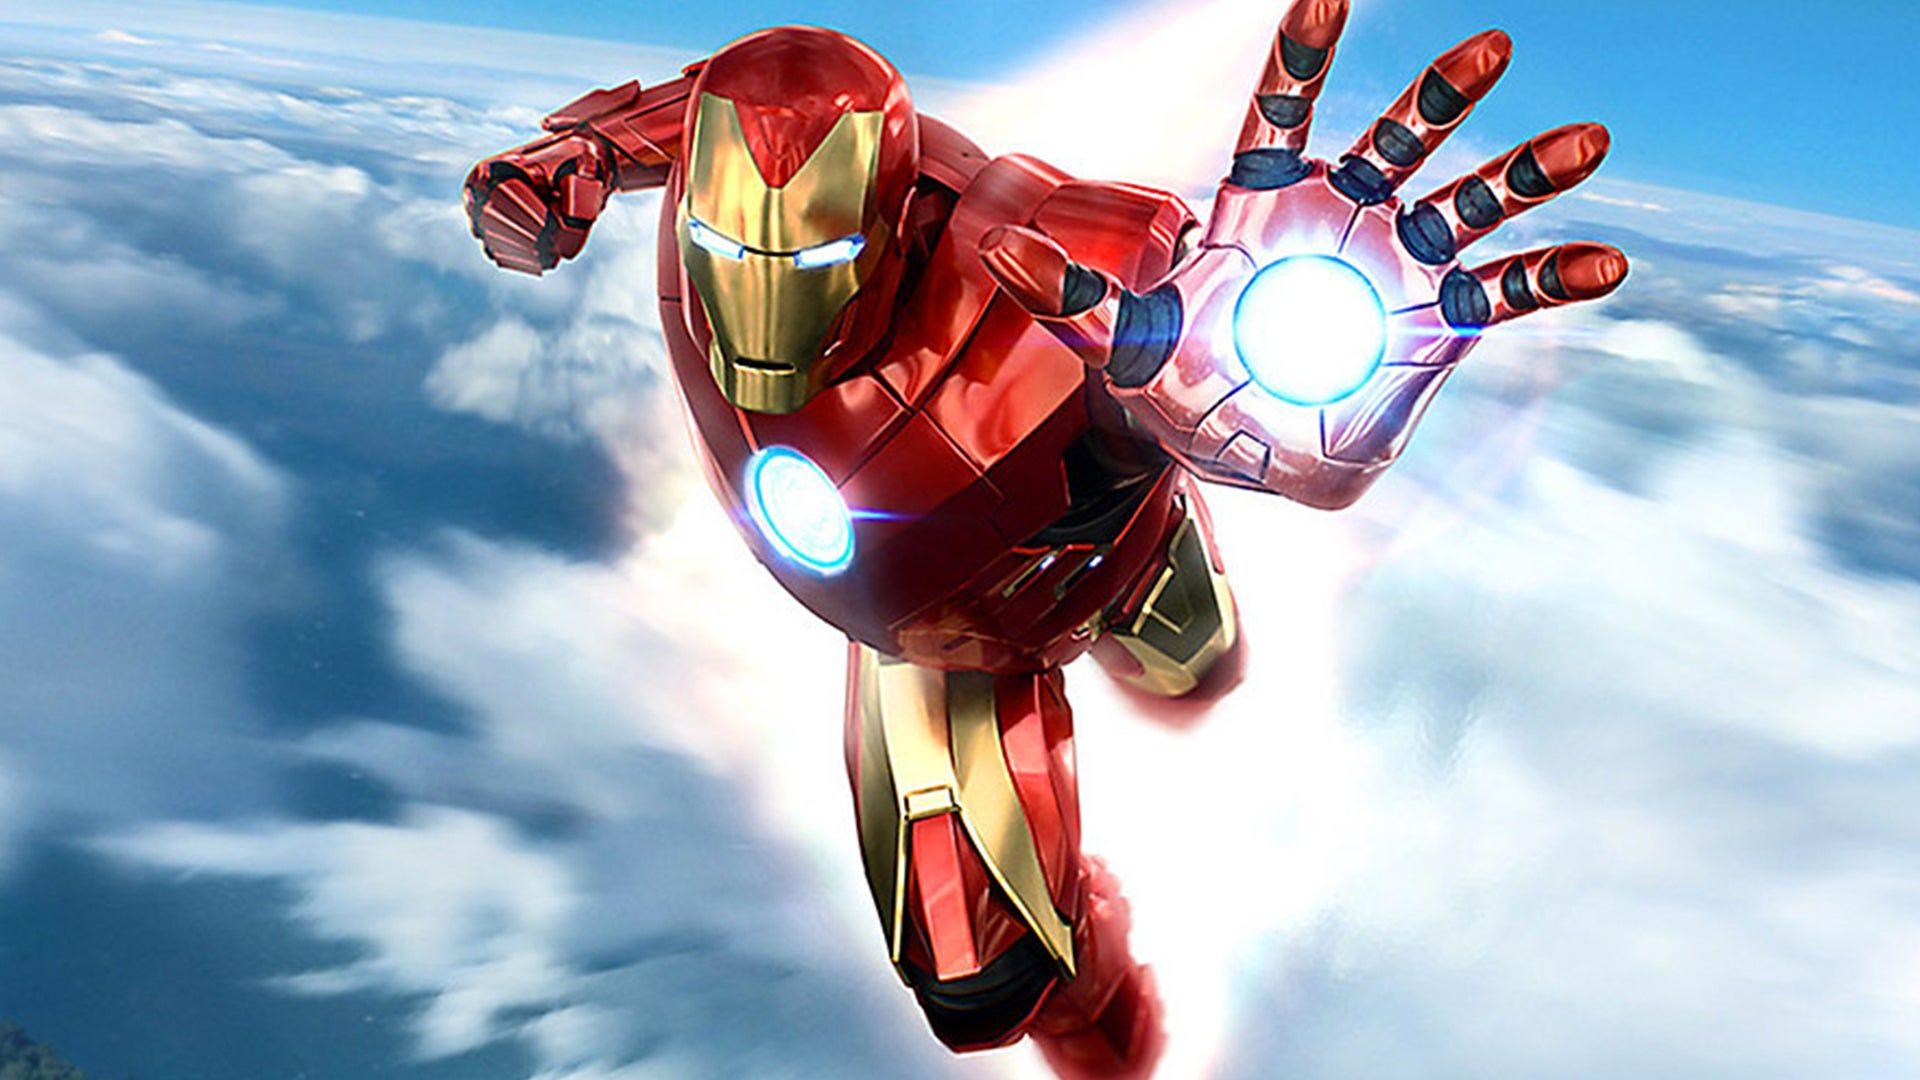 Marvel's Iron Man VR Dev on Crafting an Original Tony Stark Story